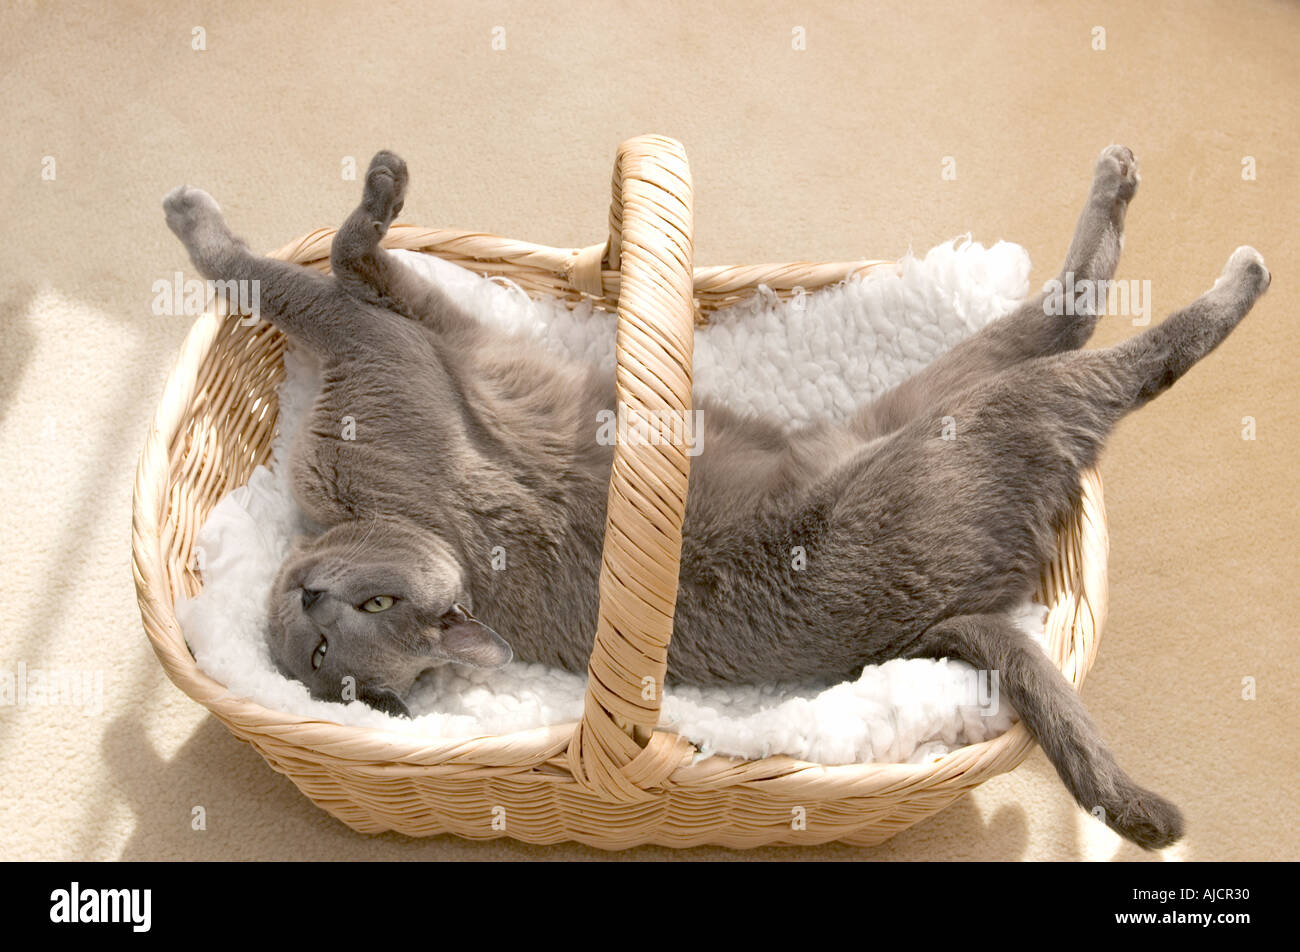 Burmese cat in laid-back mode in cat basket Stock Photo